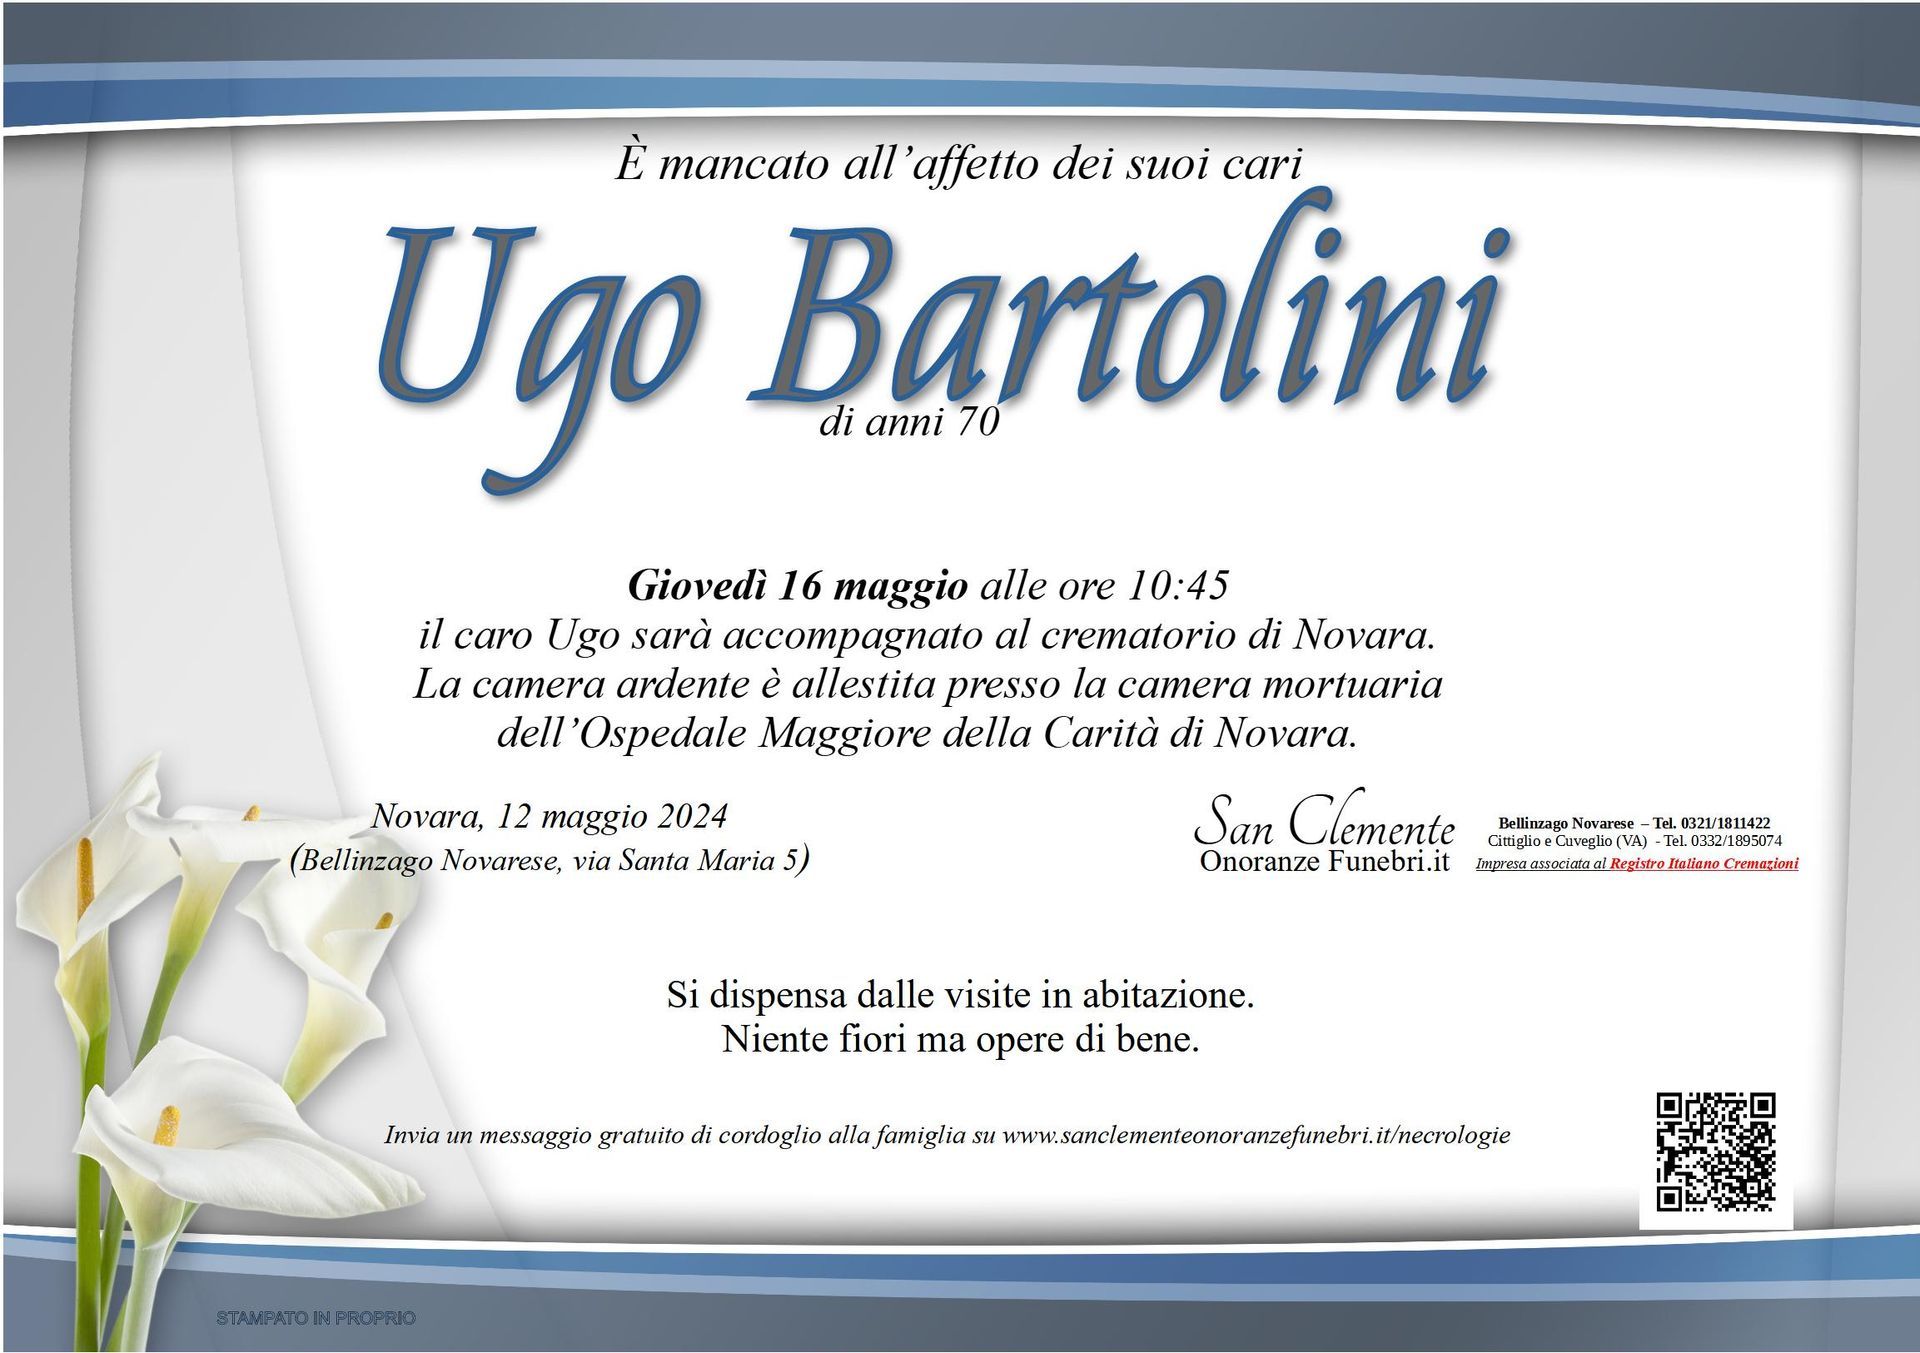 Bartolini Ugo